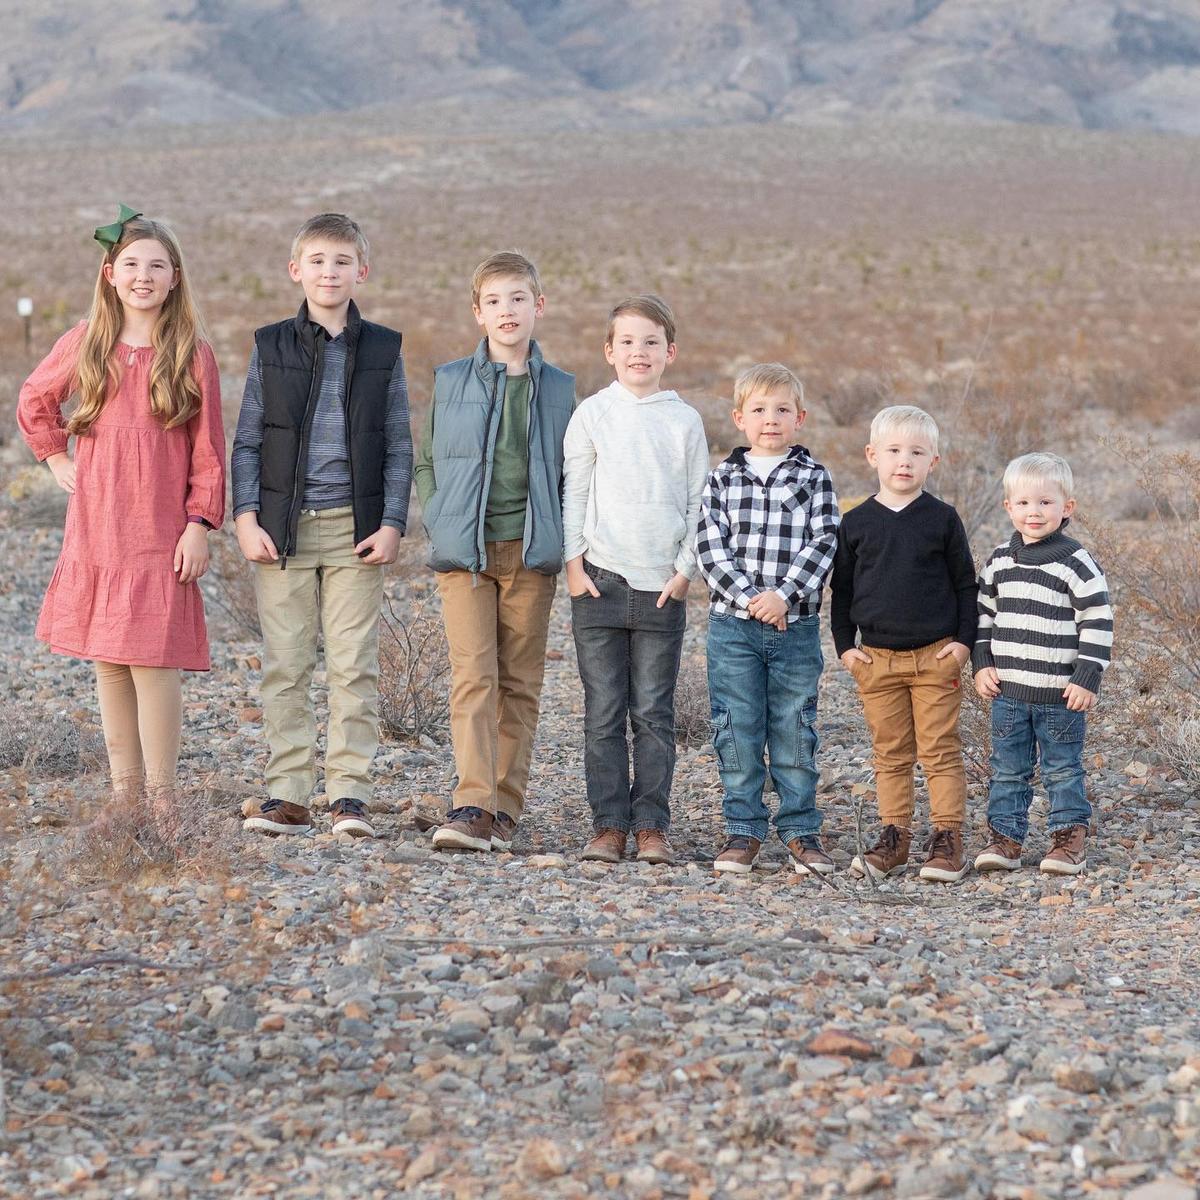 L–R: Addison, 11; William, 10; Abram, 9; Oliver, 8; Logan, 6; Preston, 4; Carson, 3. (Courtesy of <a href="https://www.instagram.com/theballcollection/">Marcie Ball</a>)